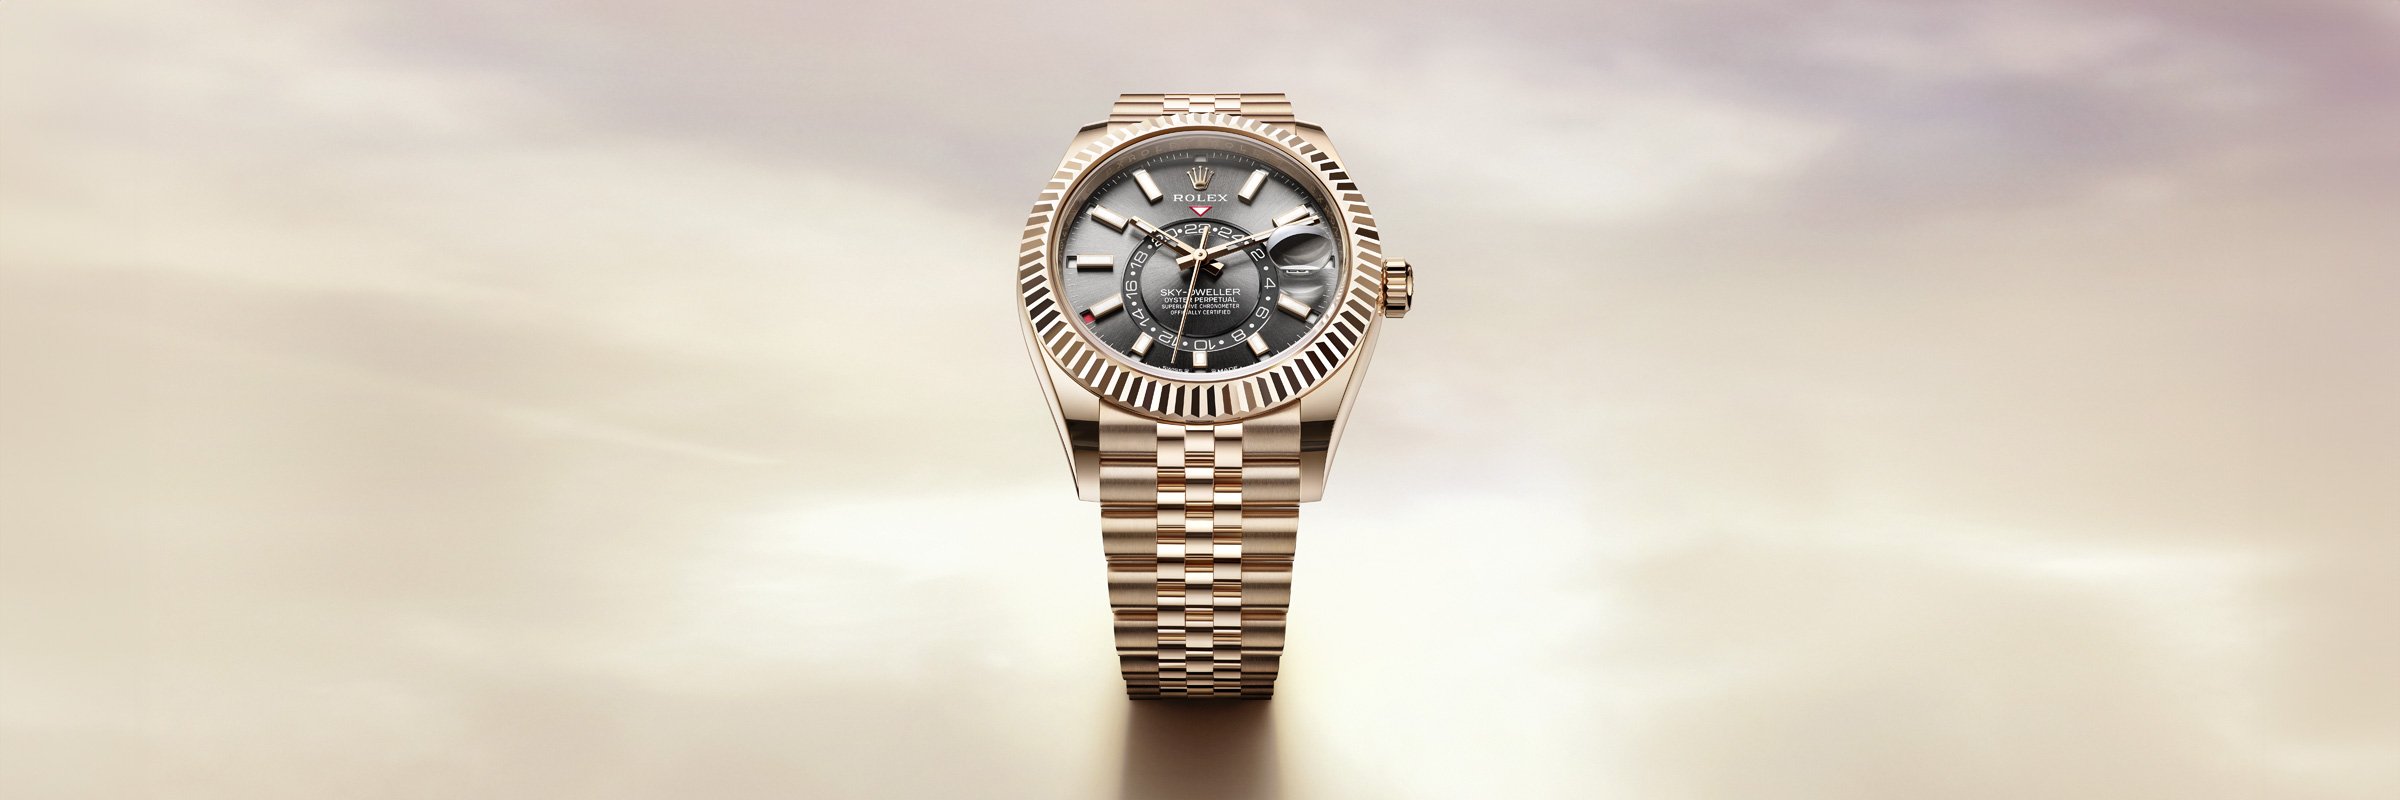 Rolex Sky-Dweller watches